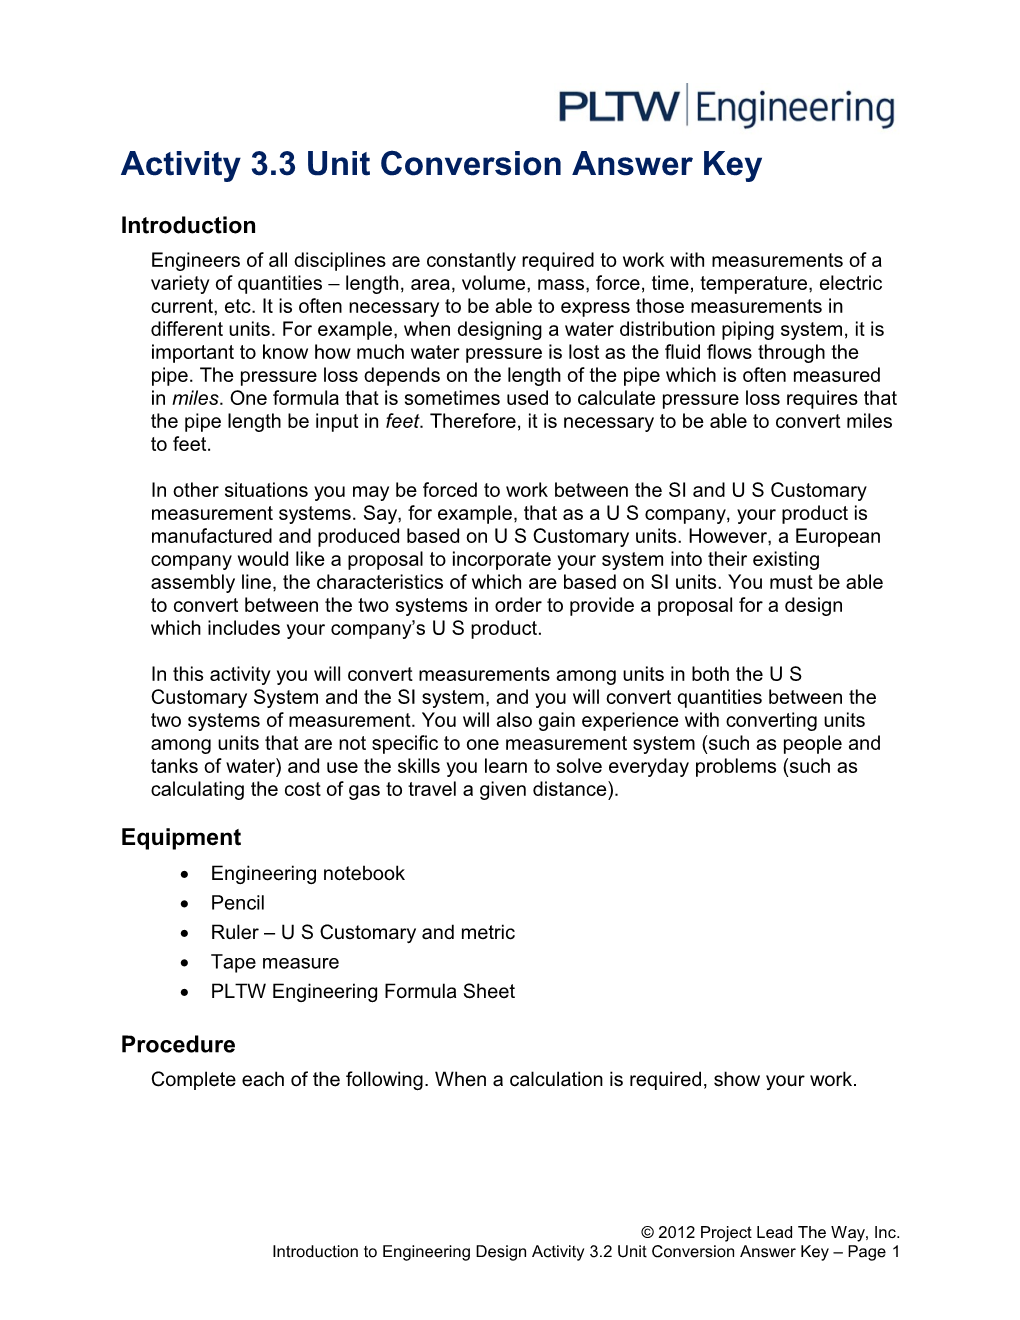 Activity 3.2 Unit Conversion Answer Key